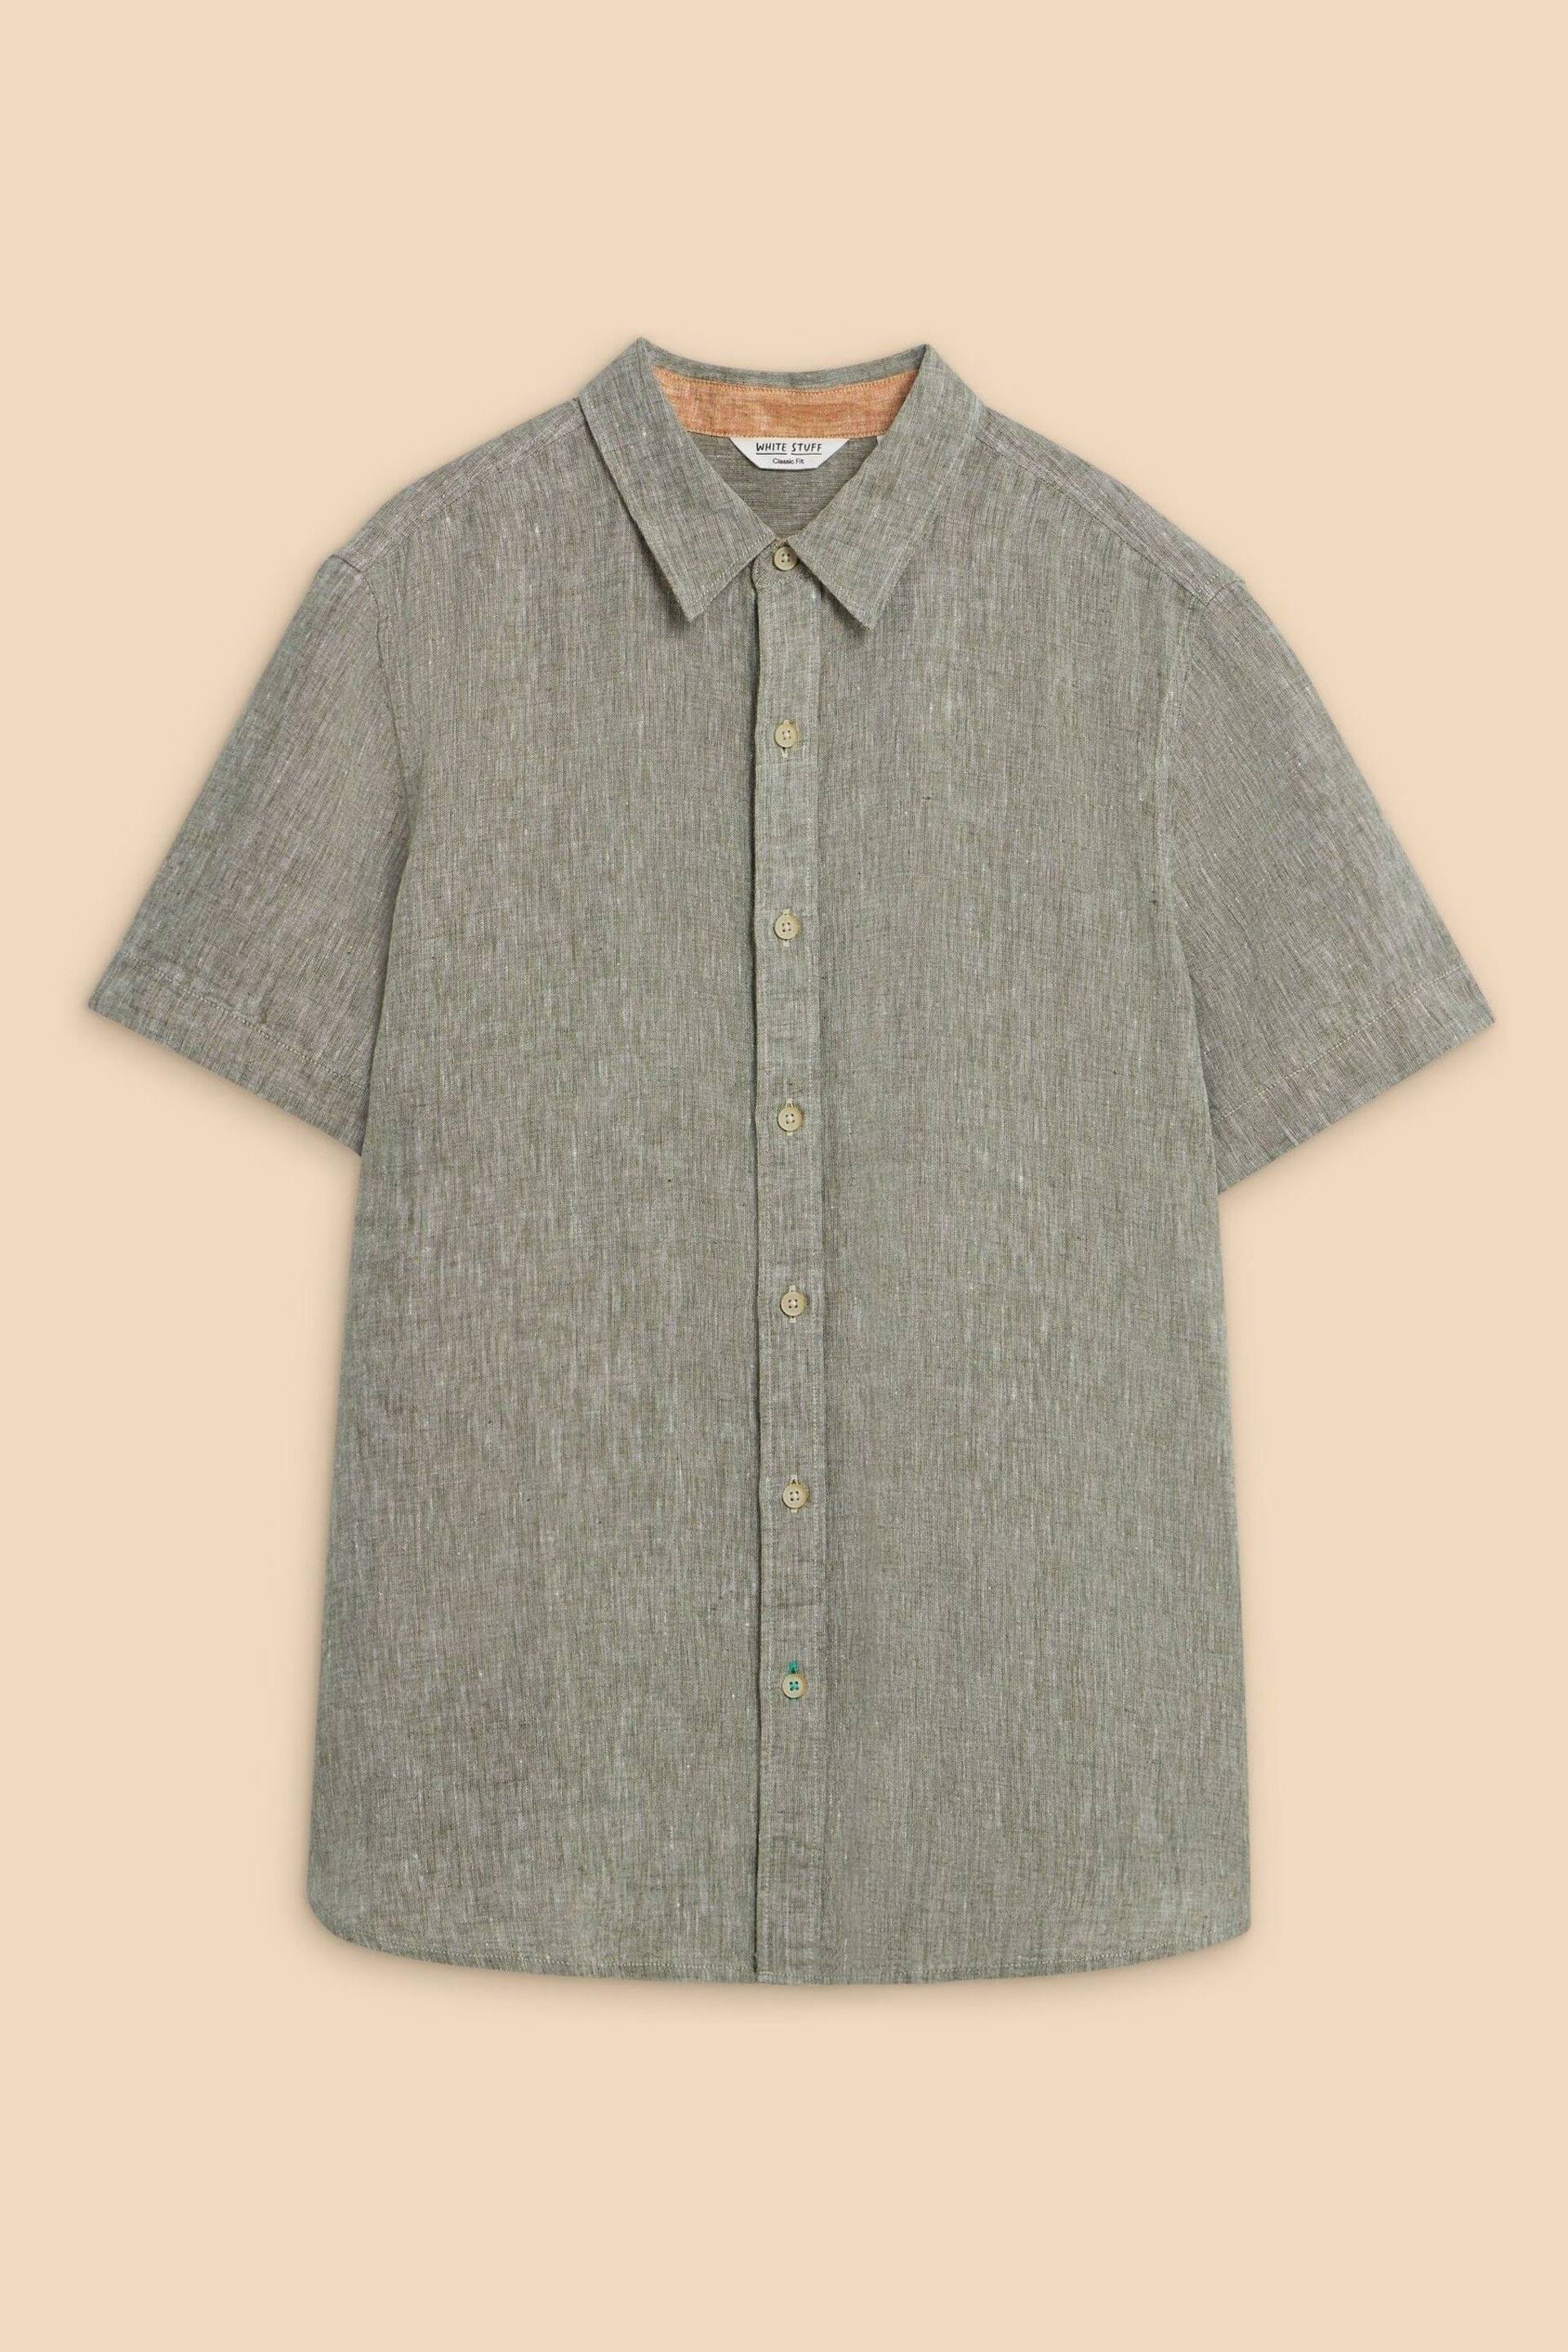 White Stuff Green Pembroke Short Sleeve Linen Shirt - Image 5 of 6